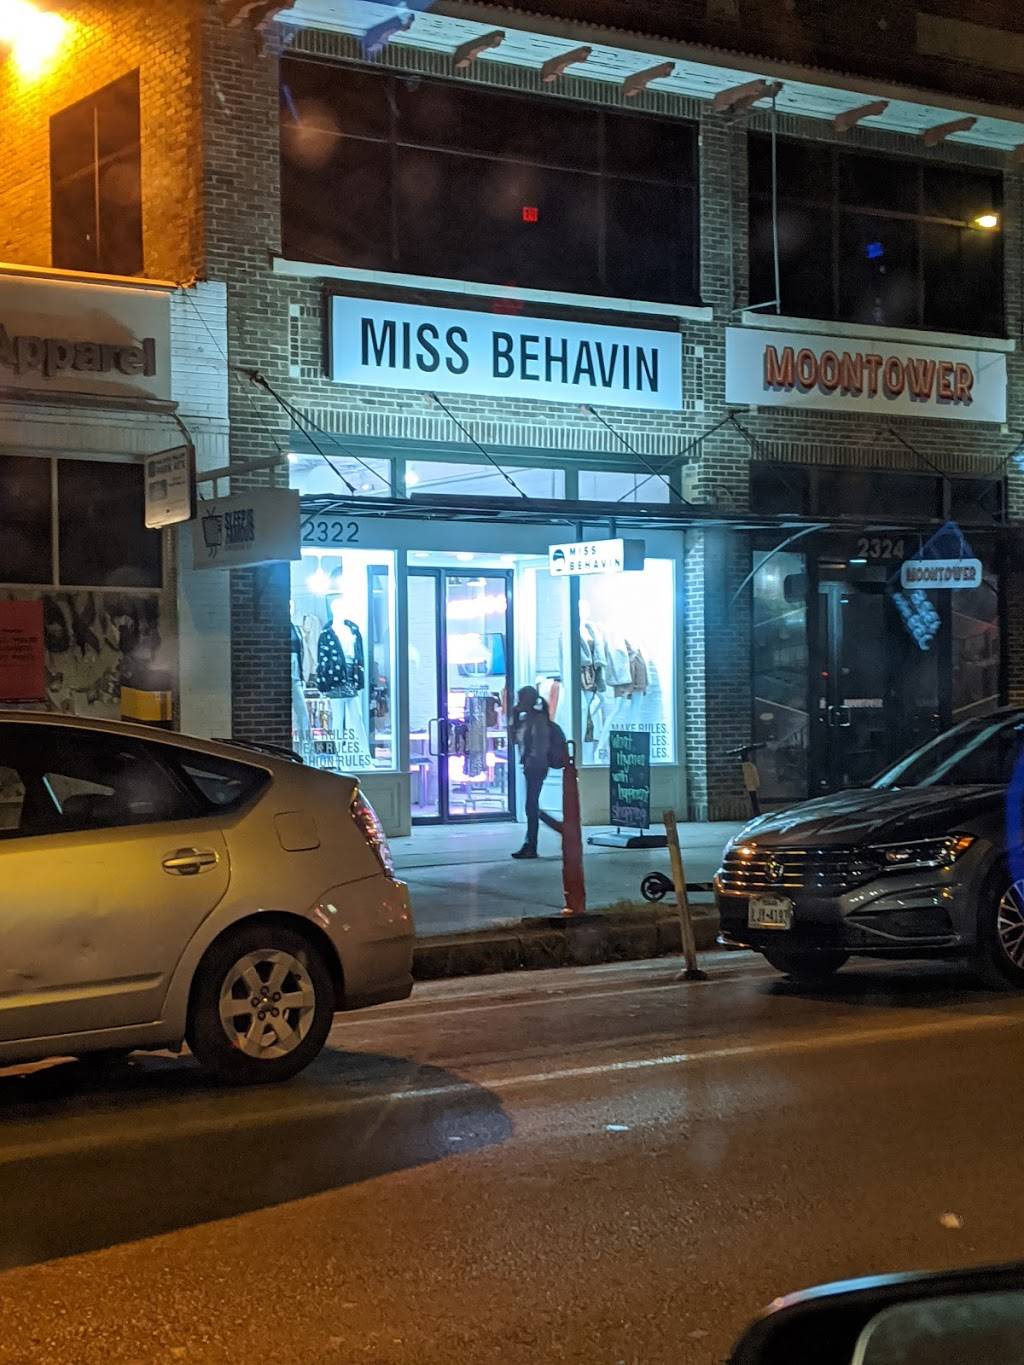 Behavin official miss Missbehavinofficial